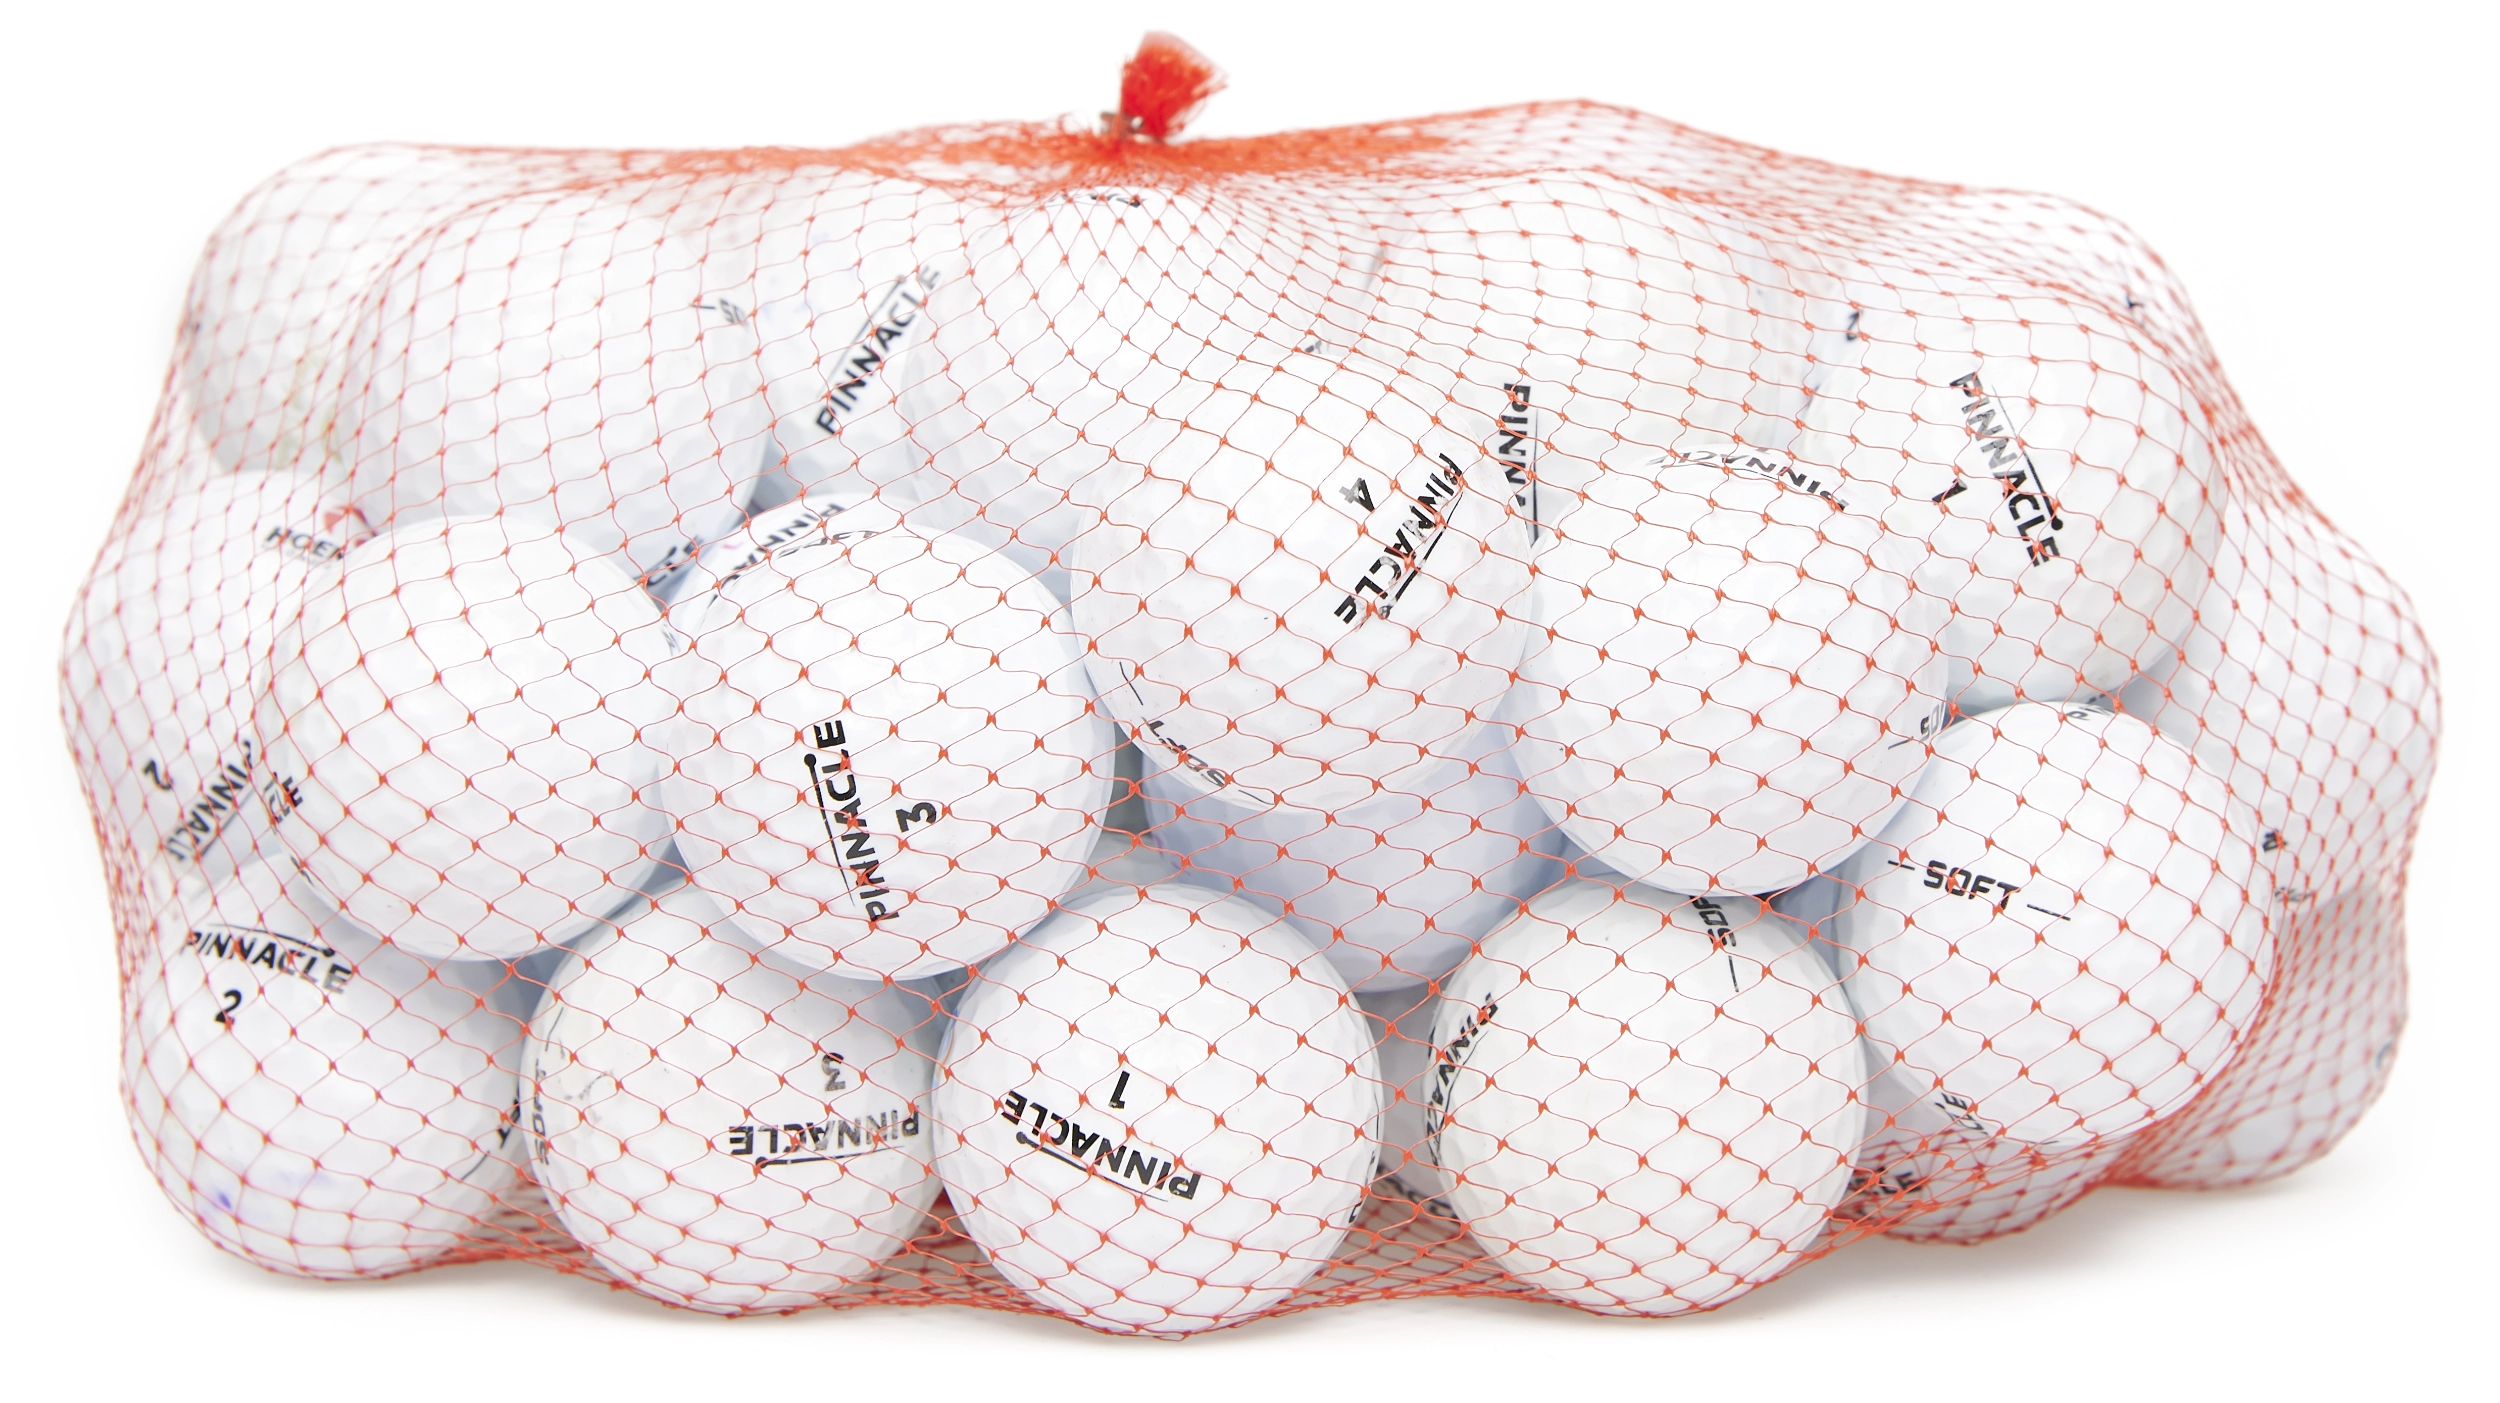 50 Pinnacle Soft Lakeballs, white